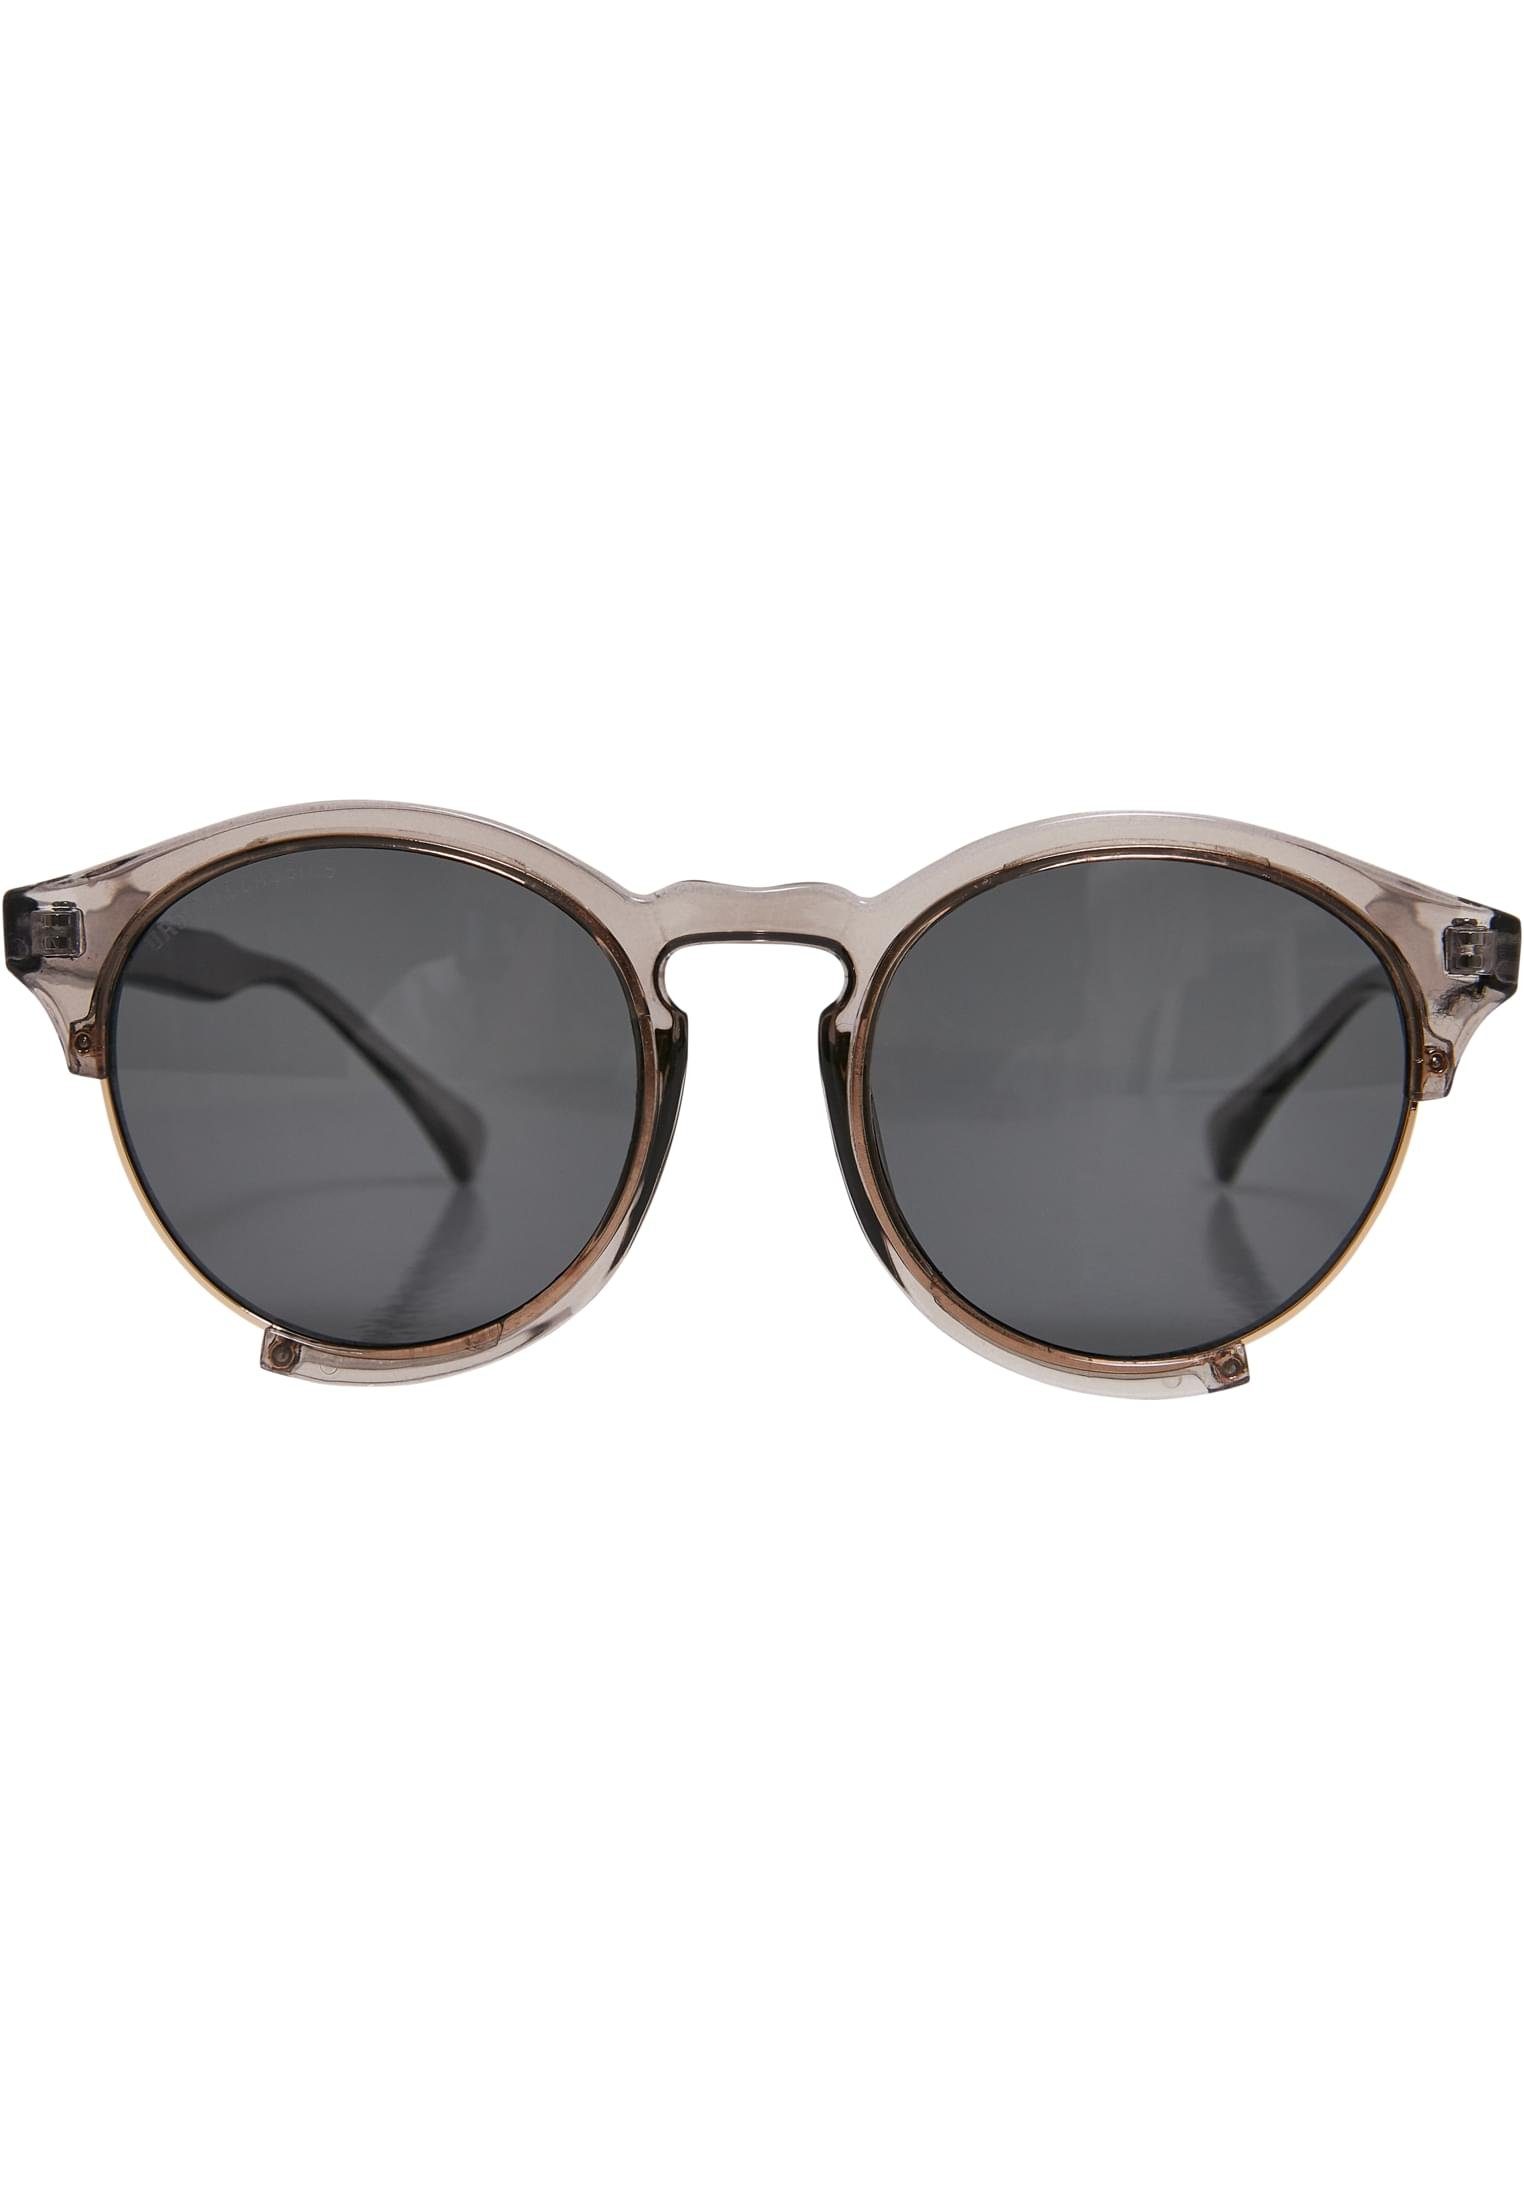 Unisex URBAN grey Sunglasses Sonnenbrille Coral Bay CLASSICS